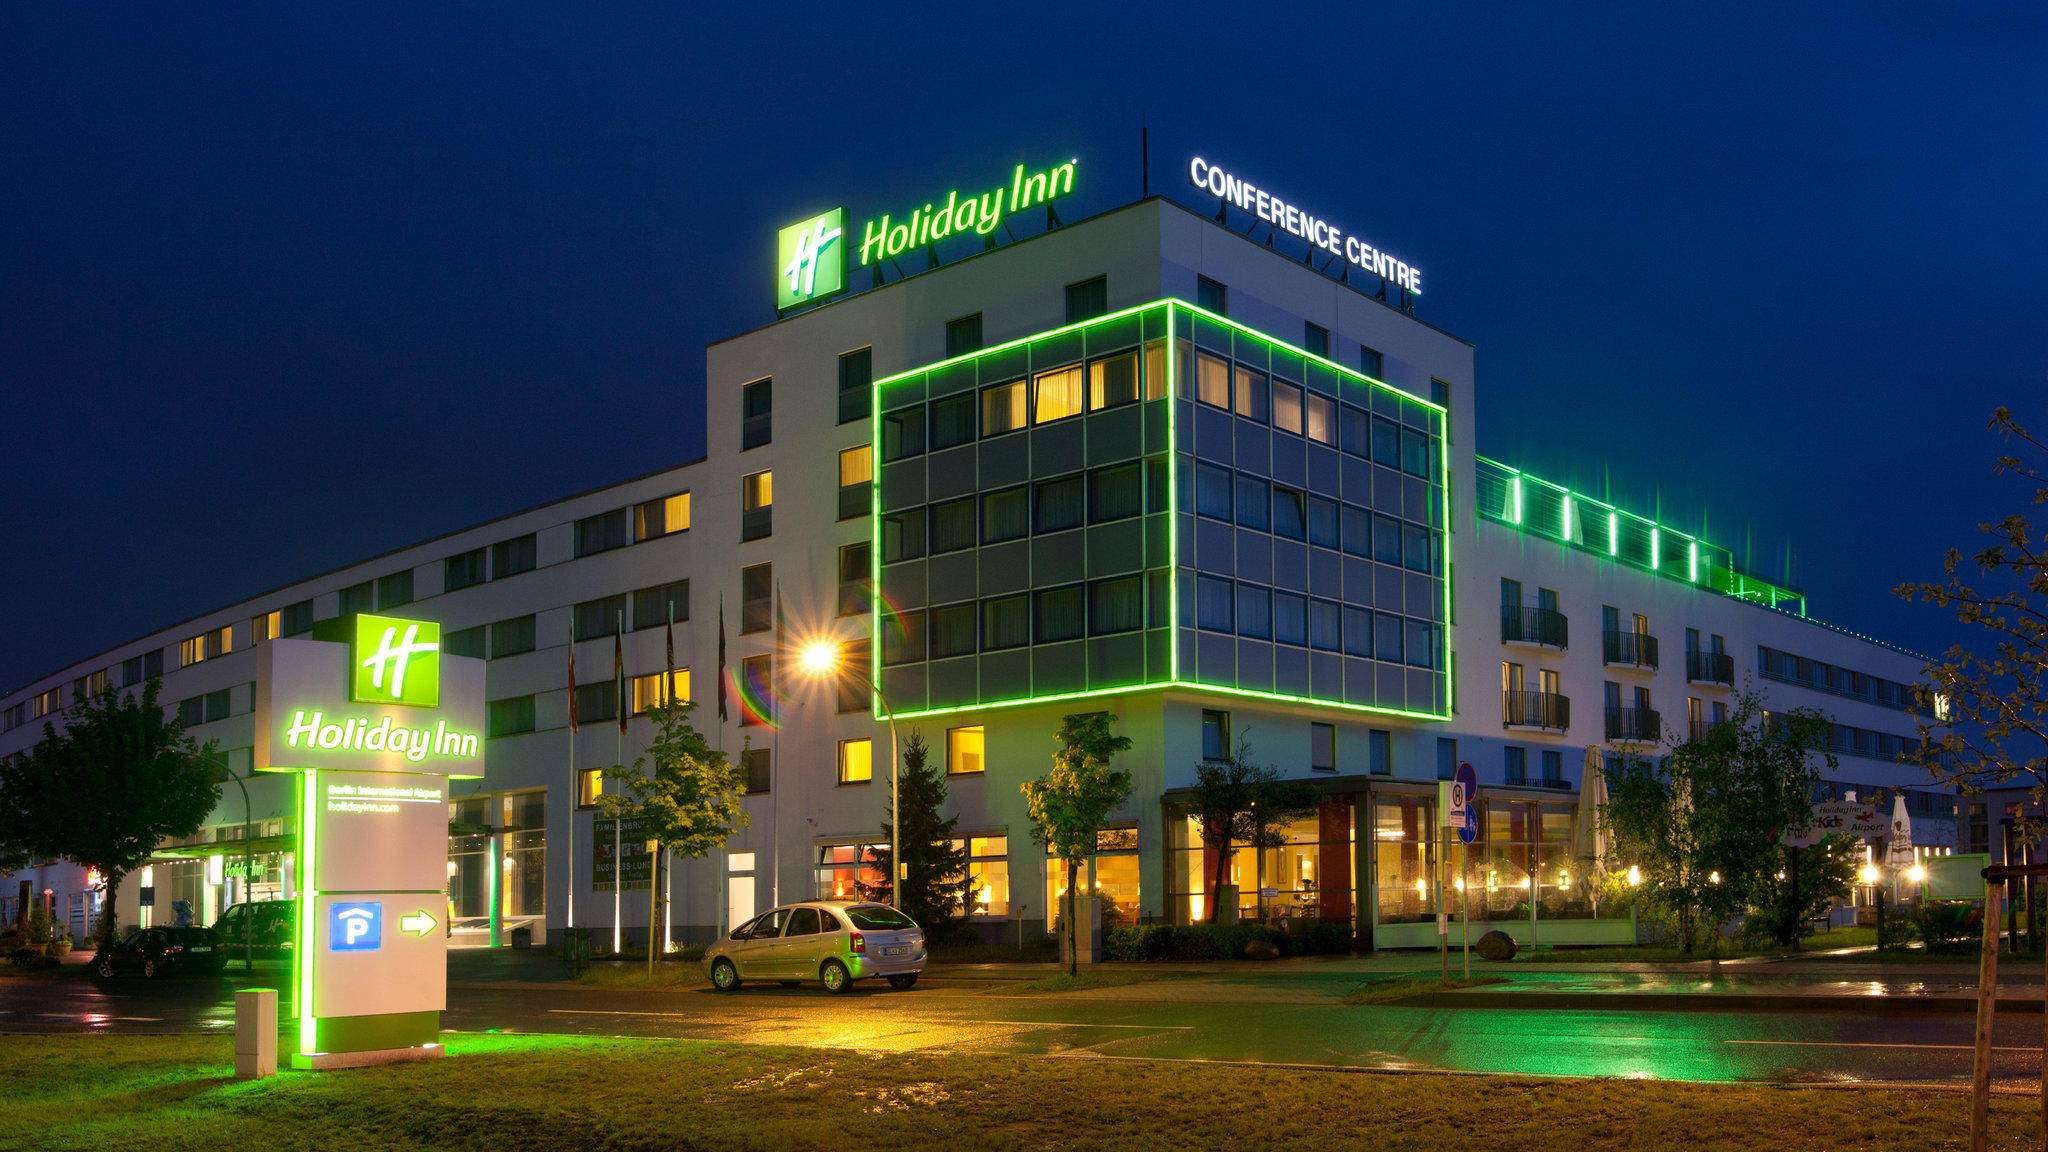 Holiday Inn Berlin Airport - Conf Centre, an IHG Hotel, Hans Grade Allee 5 in Berlin